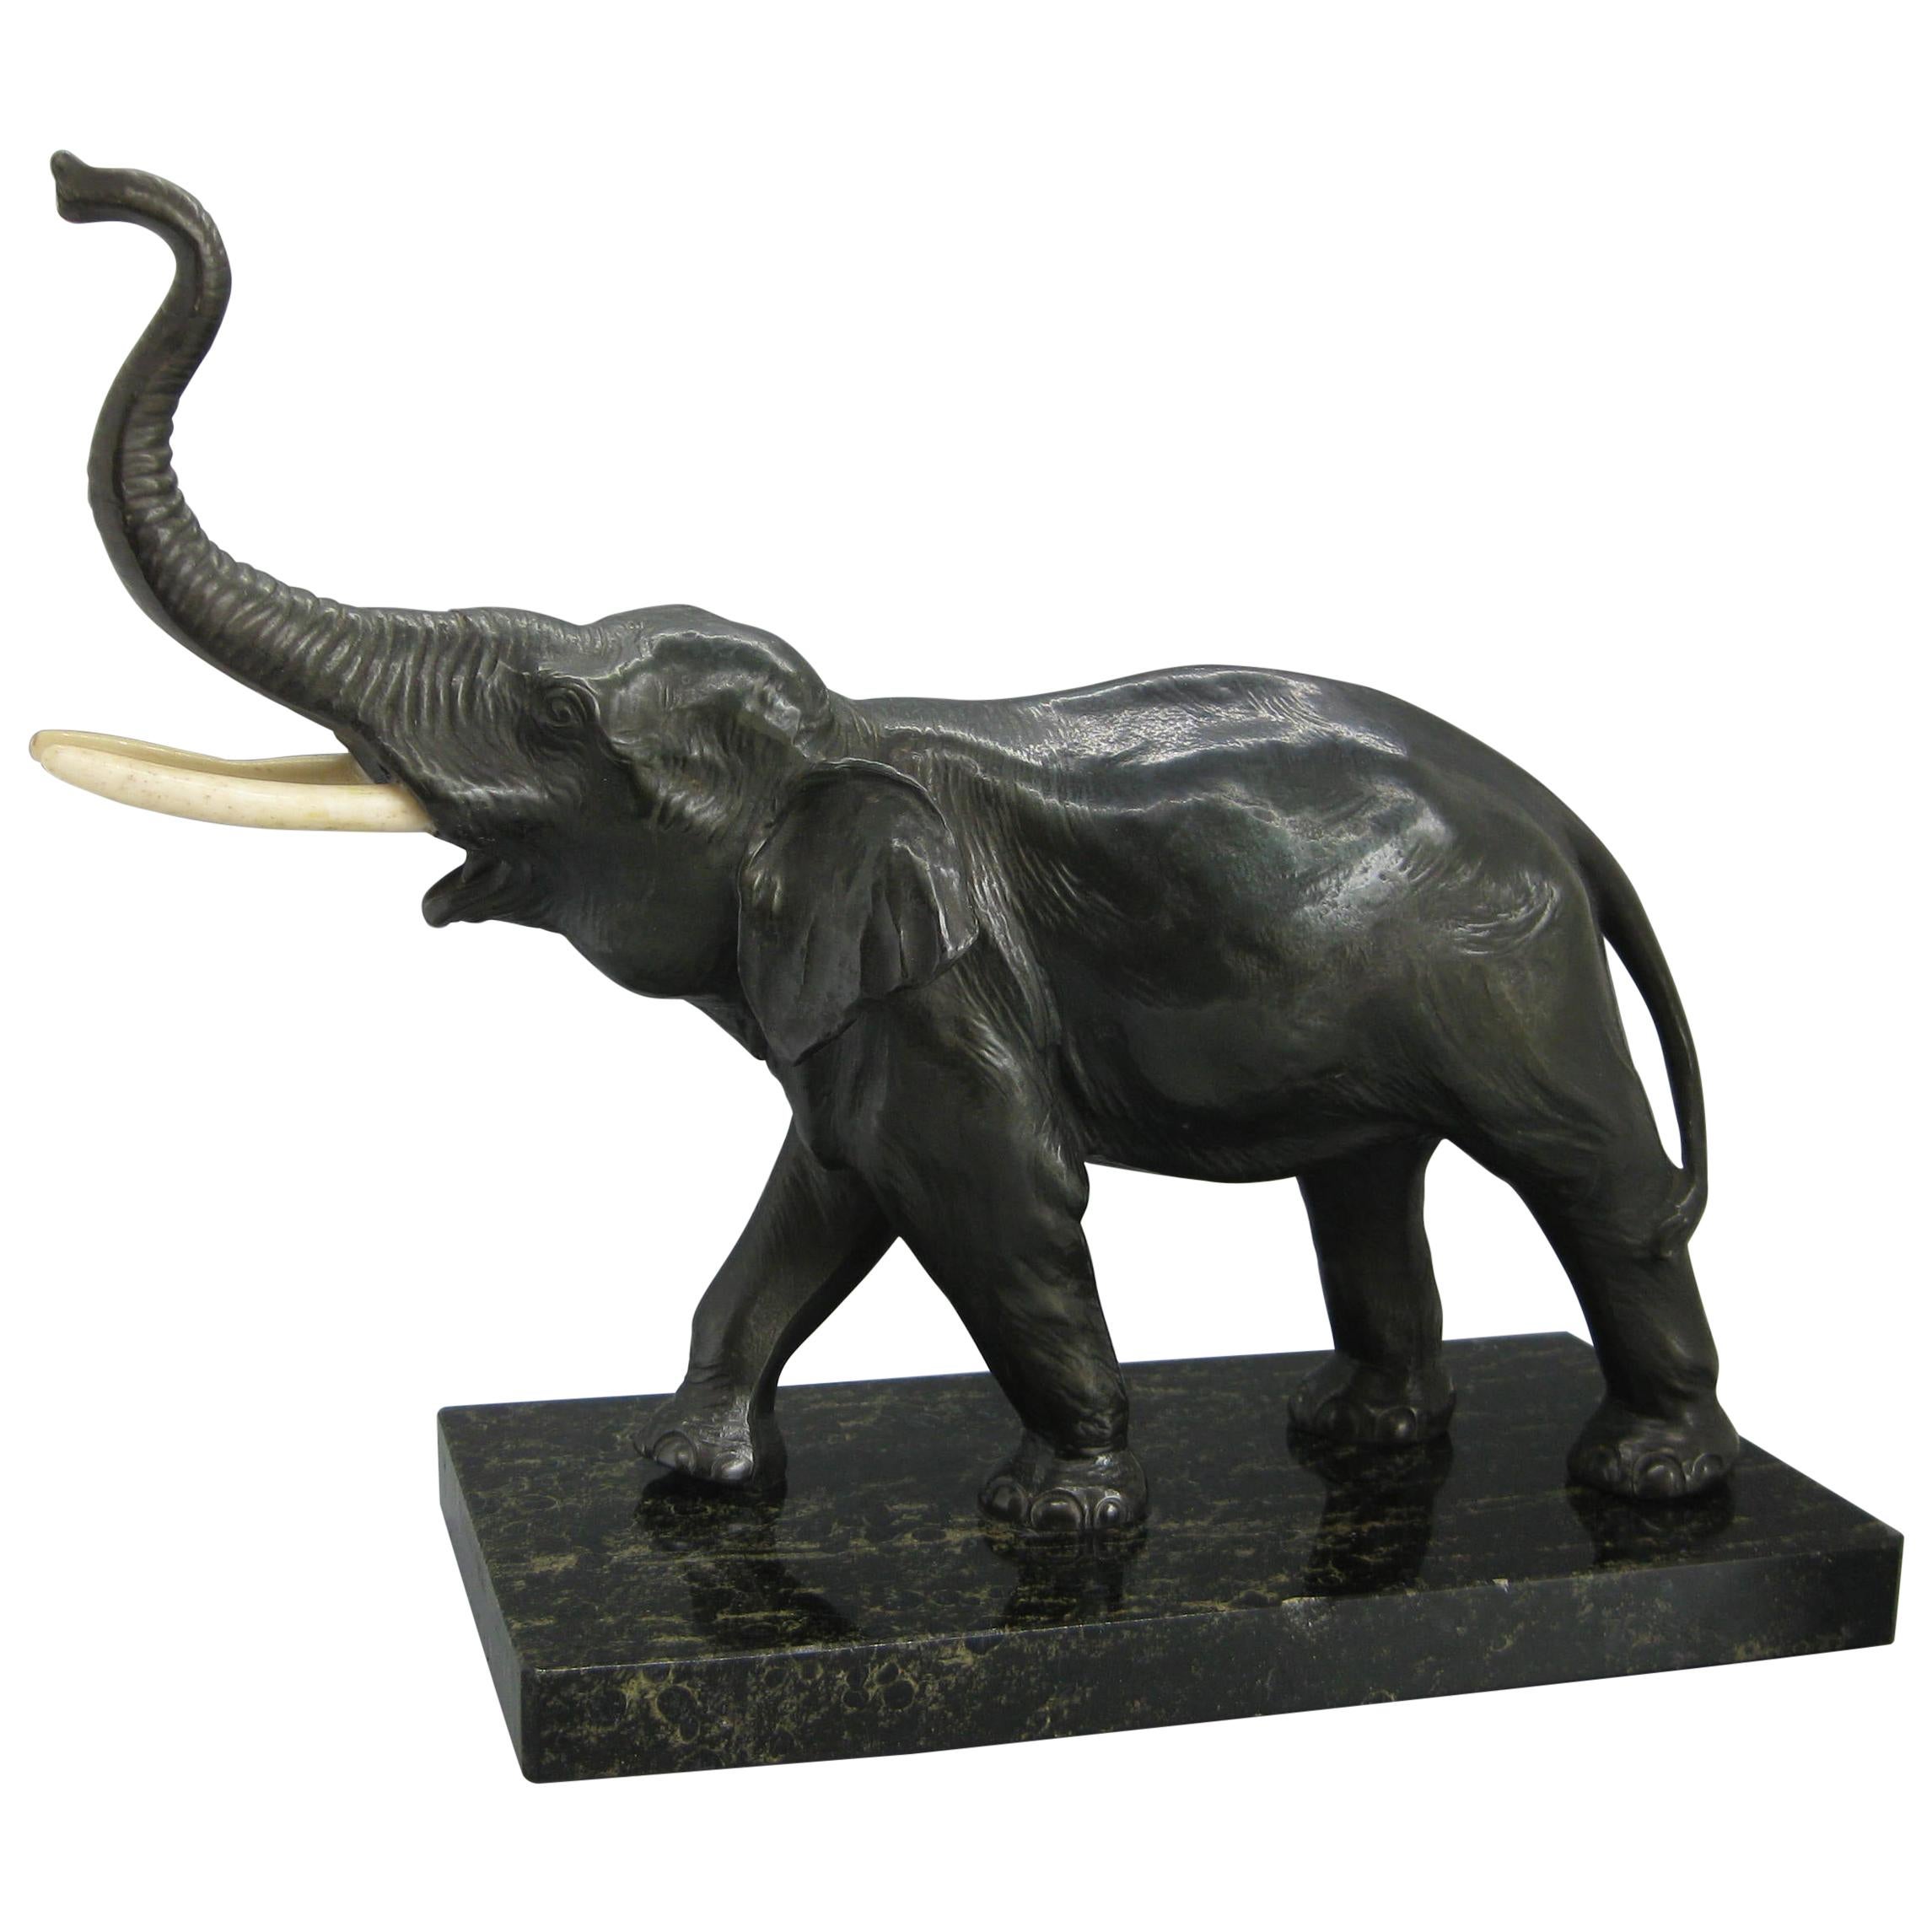 Antike Elefantenfigurenstatuenskulptur aus Bronzeguss auf Marmorsockel